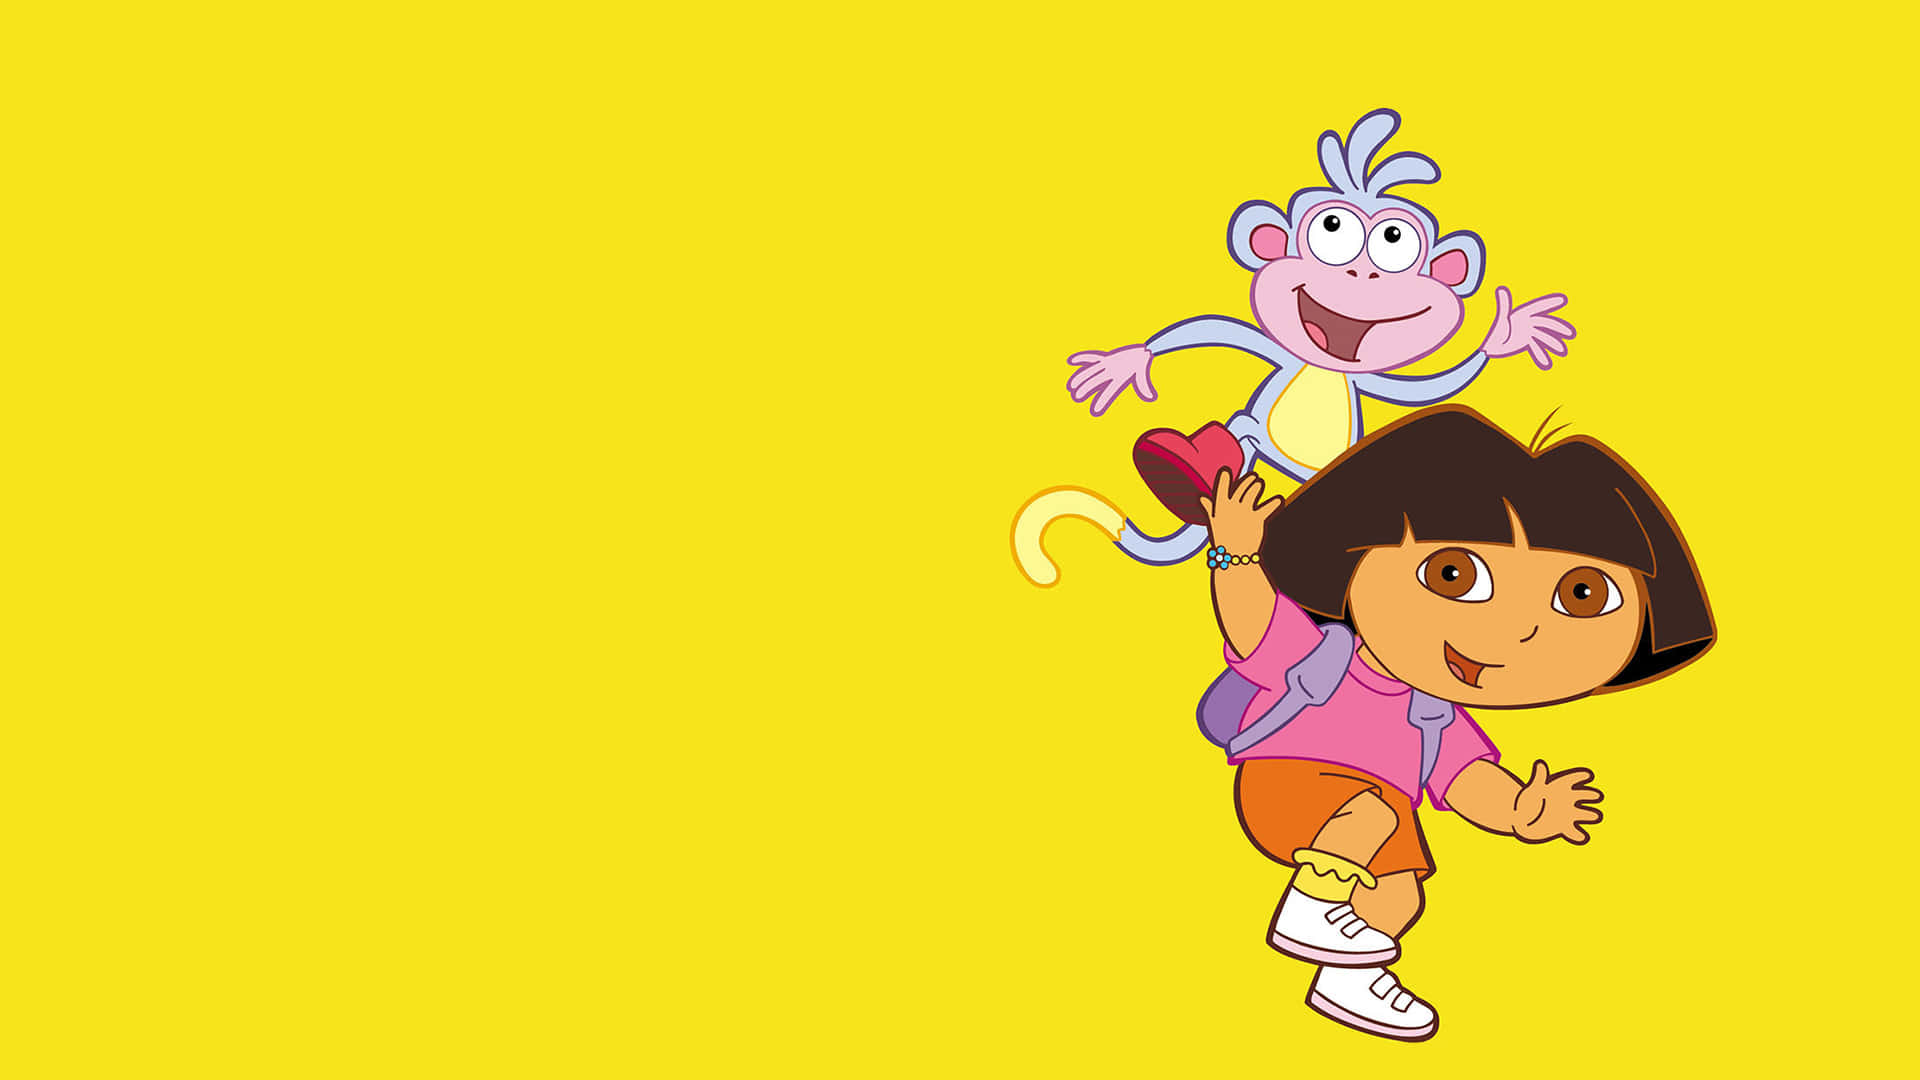 Join Dora on her New Adventure!